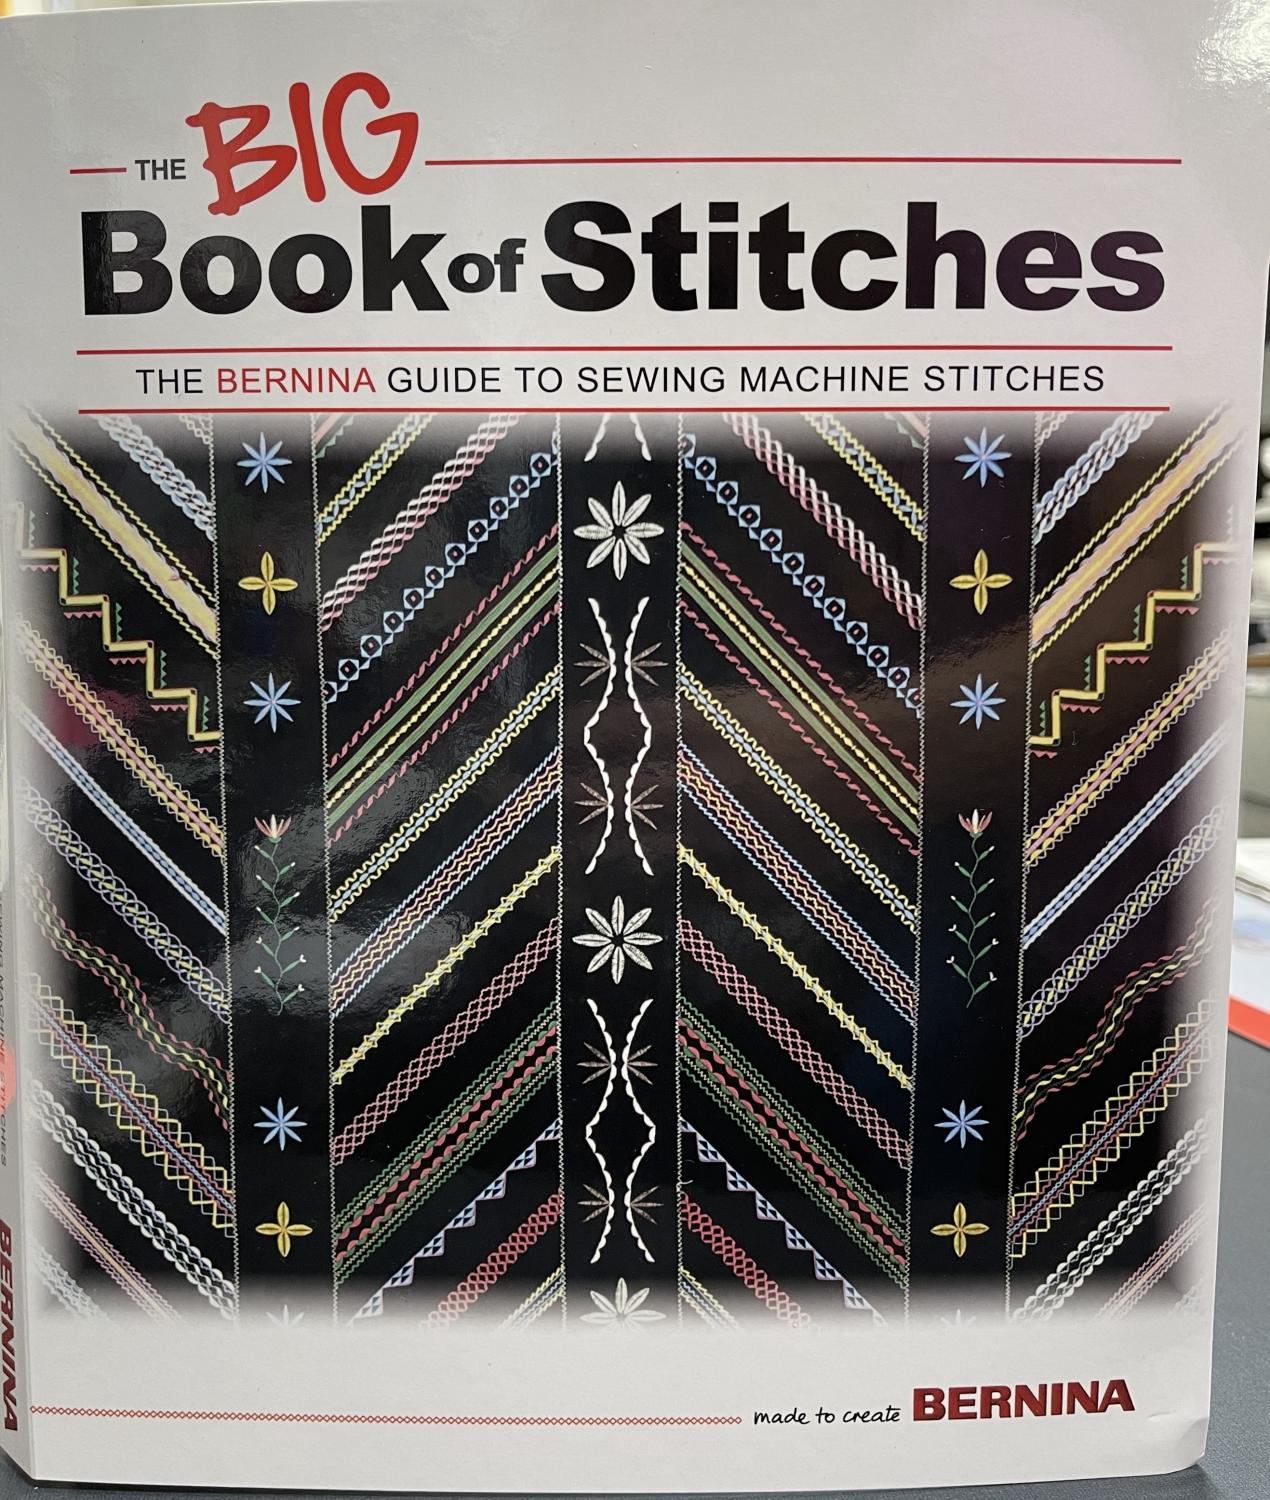 The Big Book of Stitches